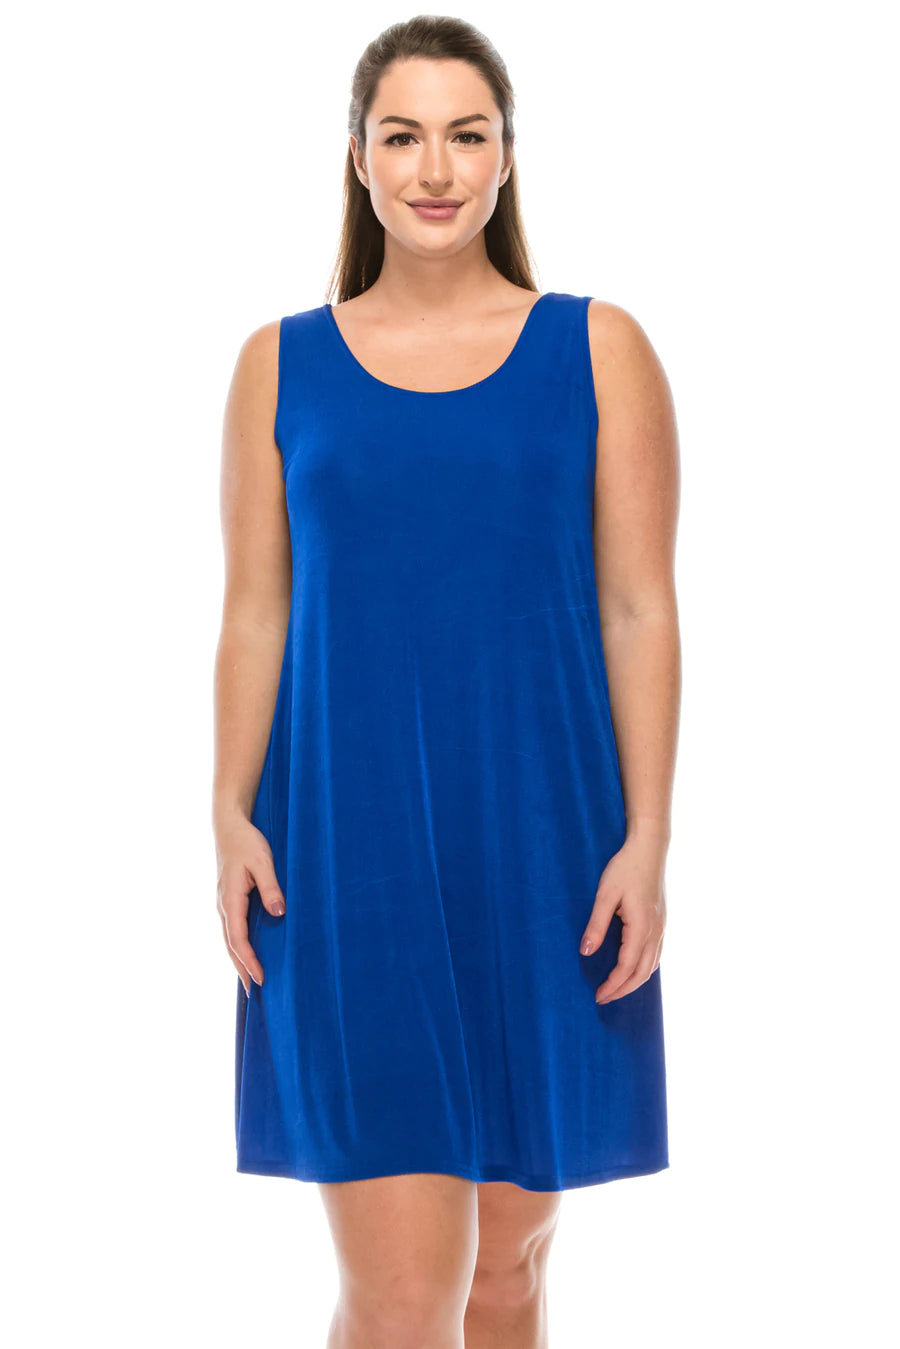 019- JoStar Slinky Sleeveless Short Dress- Royal